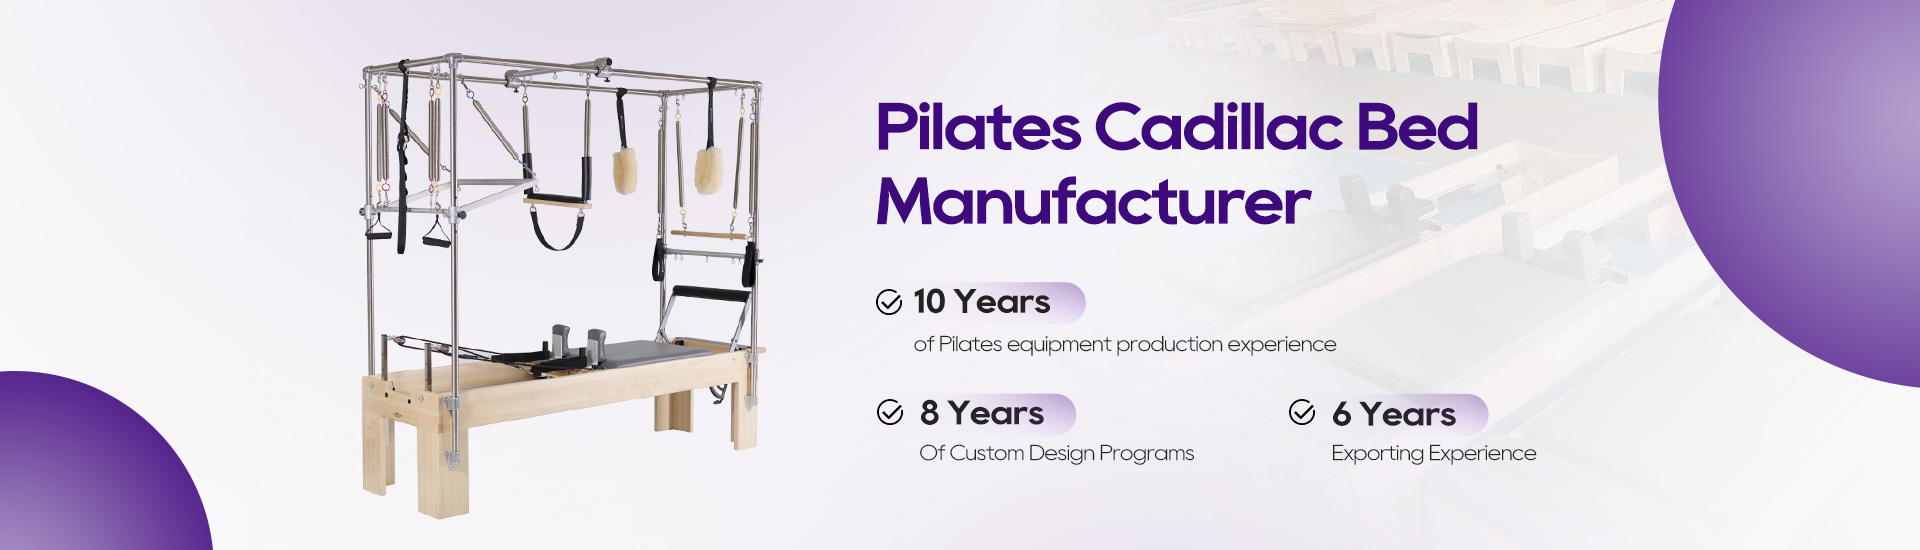 Pilates Cadillac Bed banner